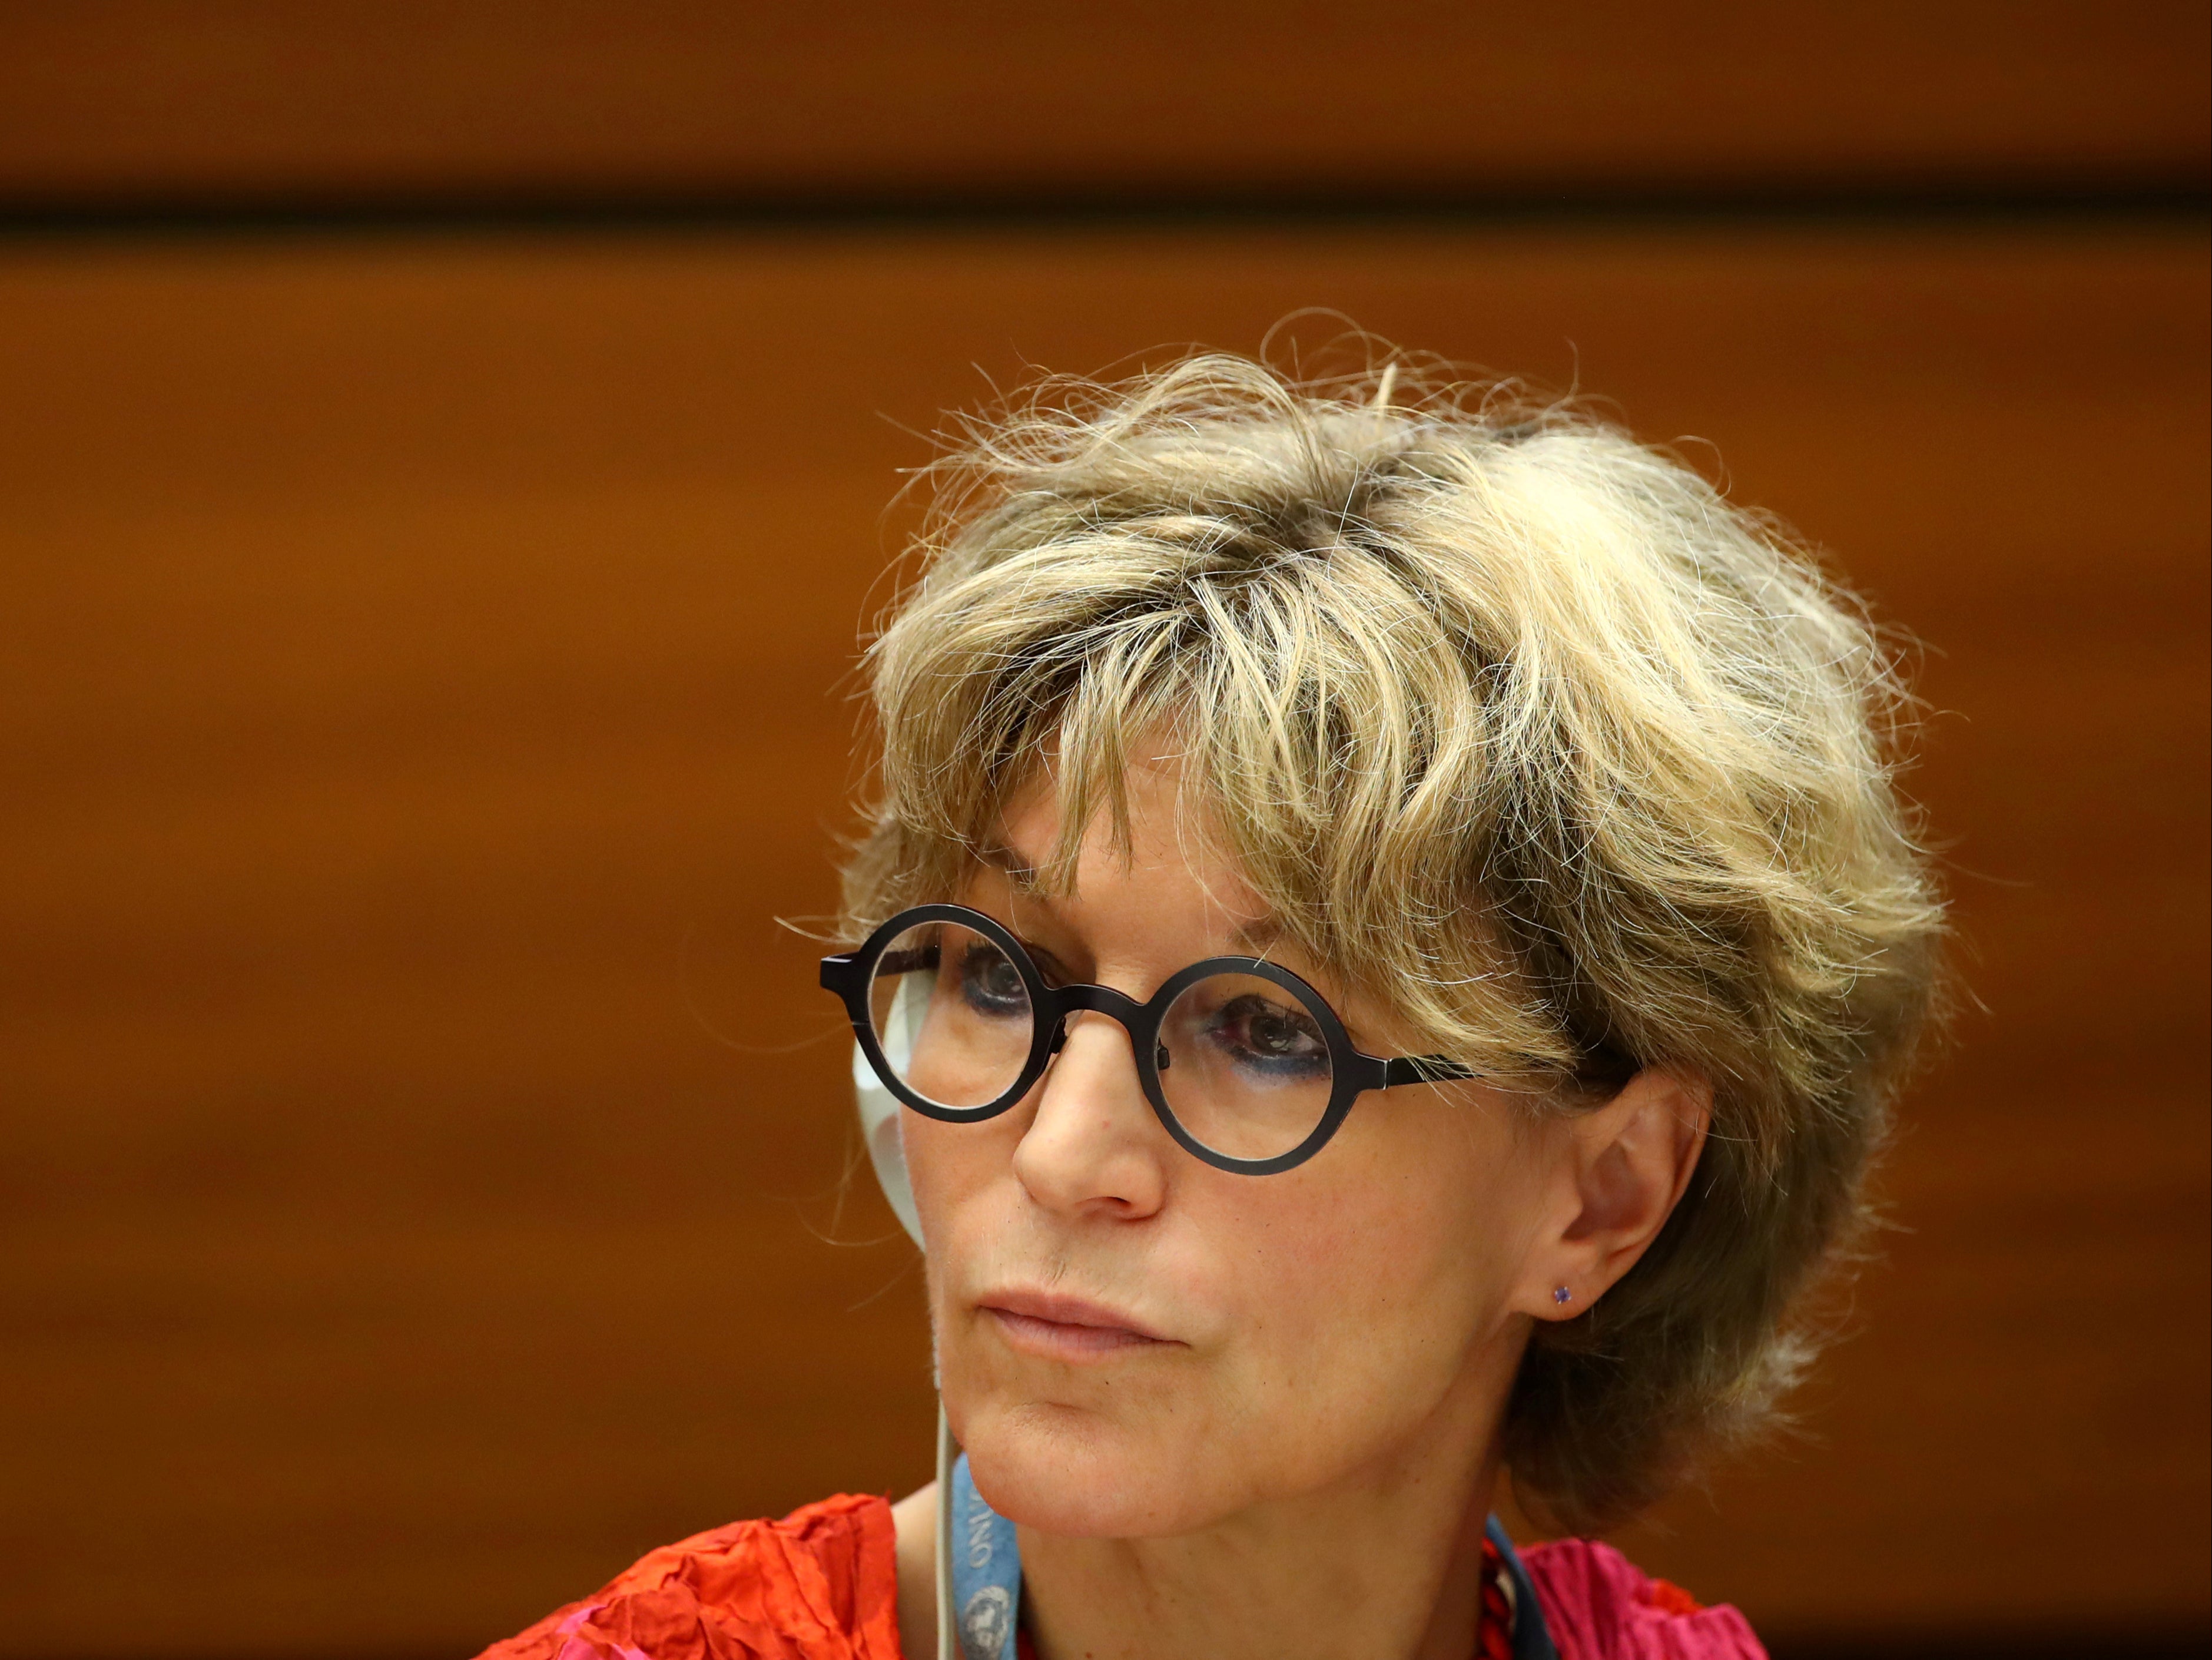 Agnes Callamard is the UN special rapporteur on extrajudicial executions